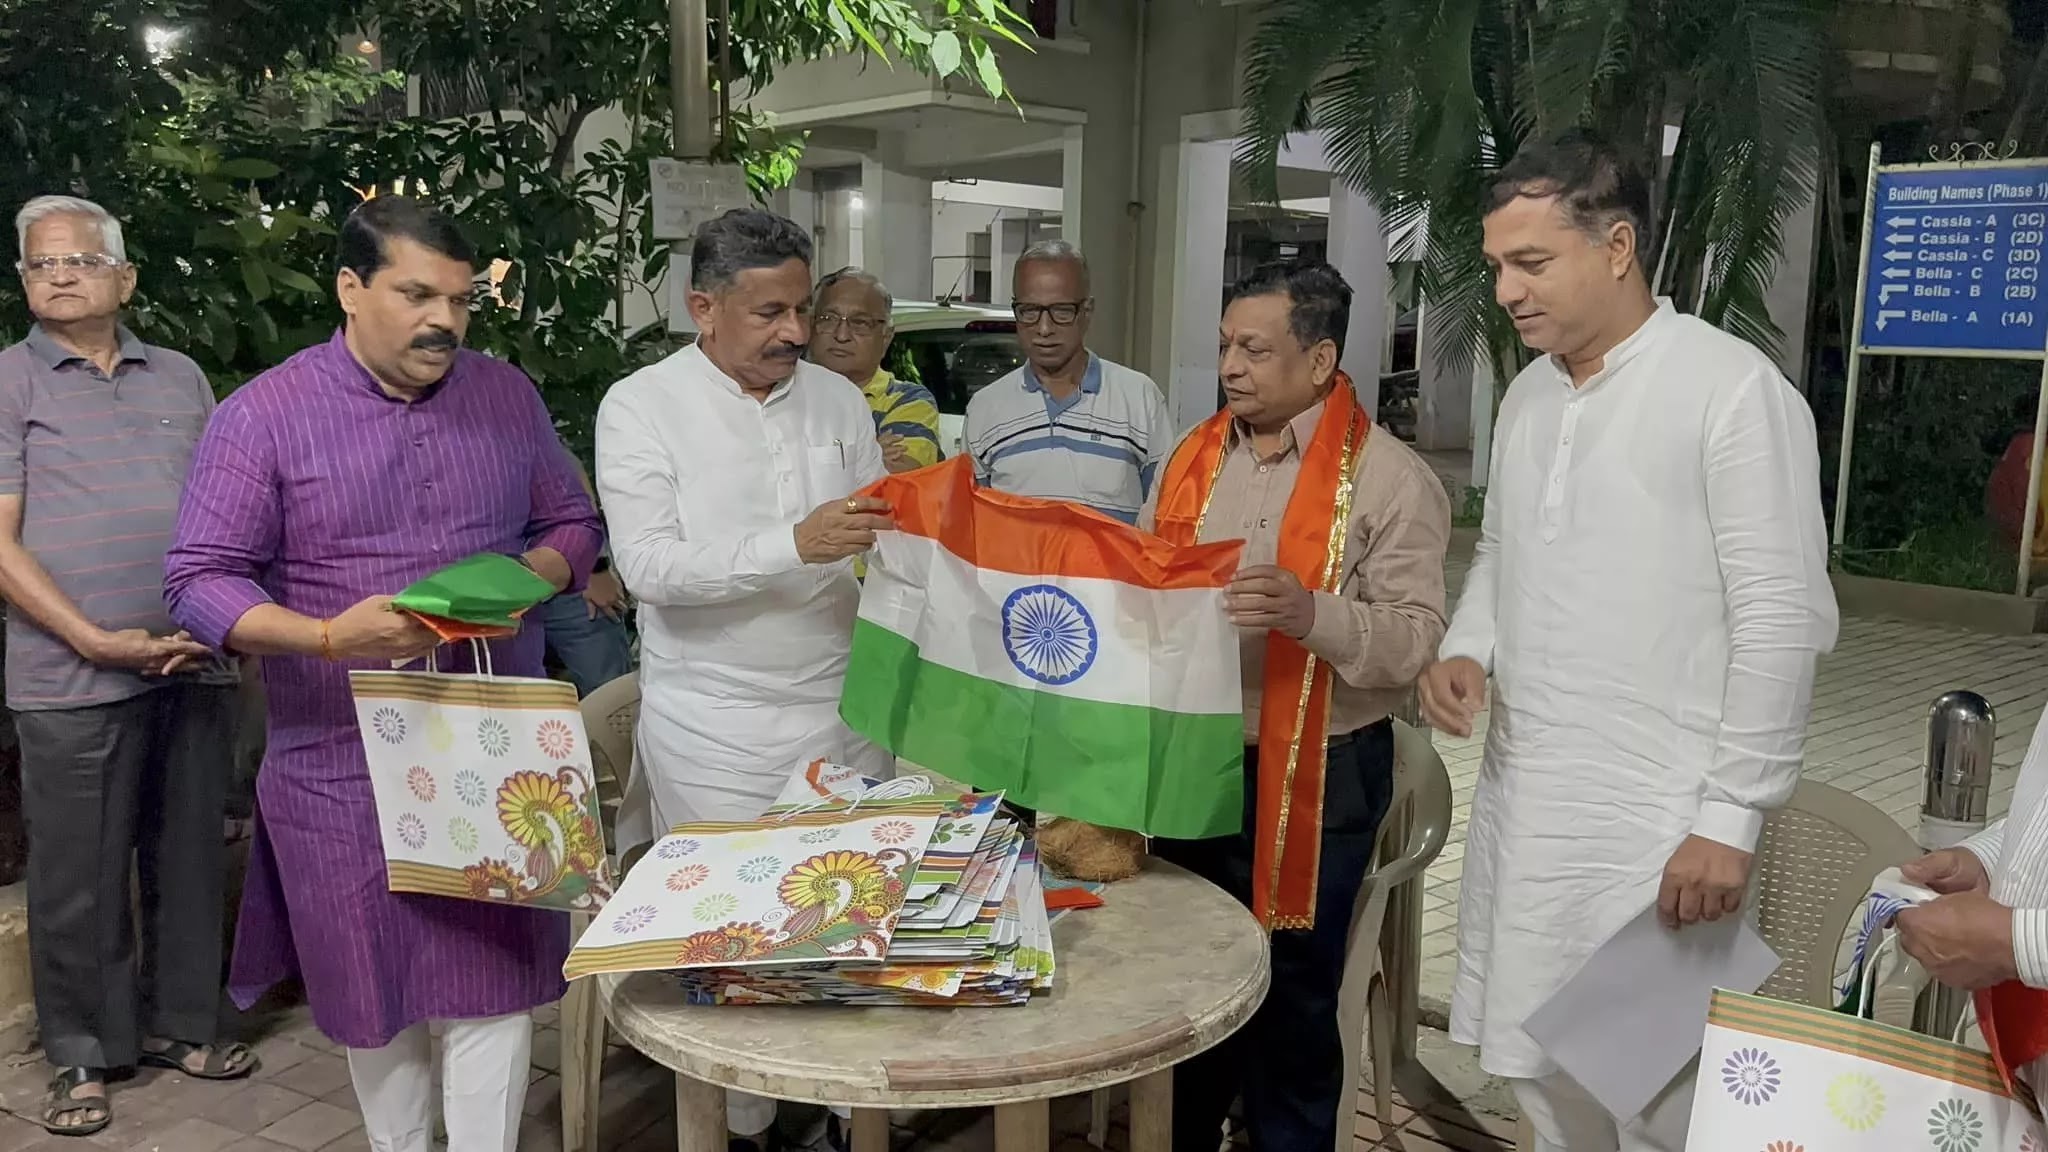 Allusion to Mahayuti in Khadakwasal from “Har Ghar Tiranga”; Bhimrao Tapkir, Sachin Dodke distributed national flag together